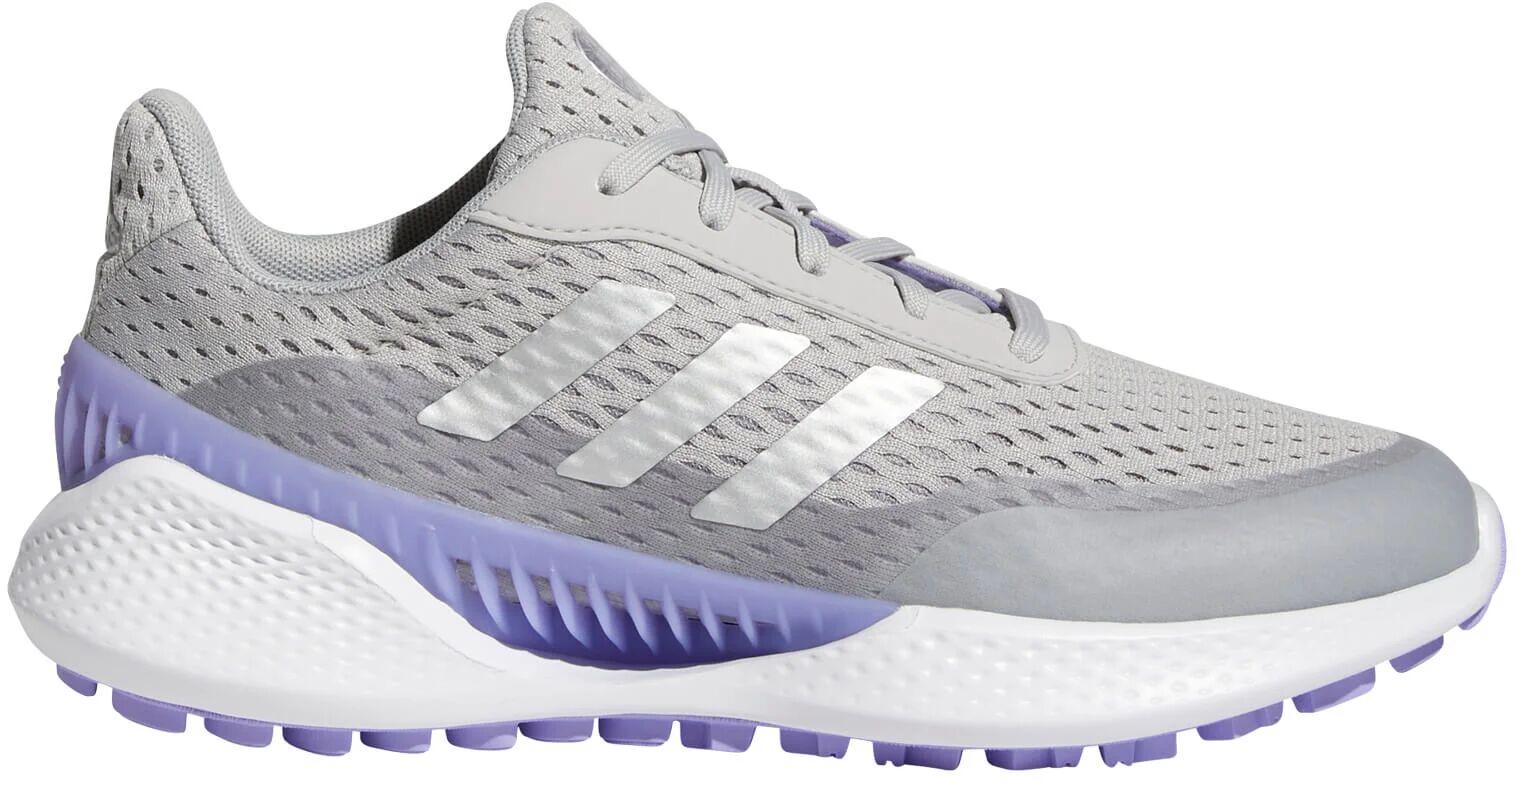 adidas Womens Summervent Golf Shoes - Grey Two/Silver Metallic/Light Purple - 8.5 - M